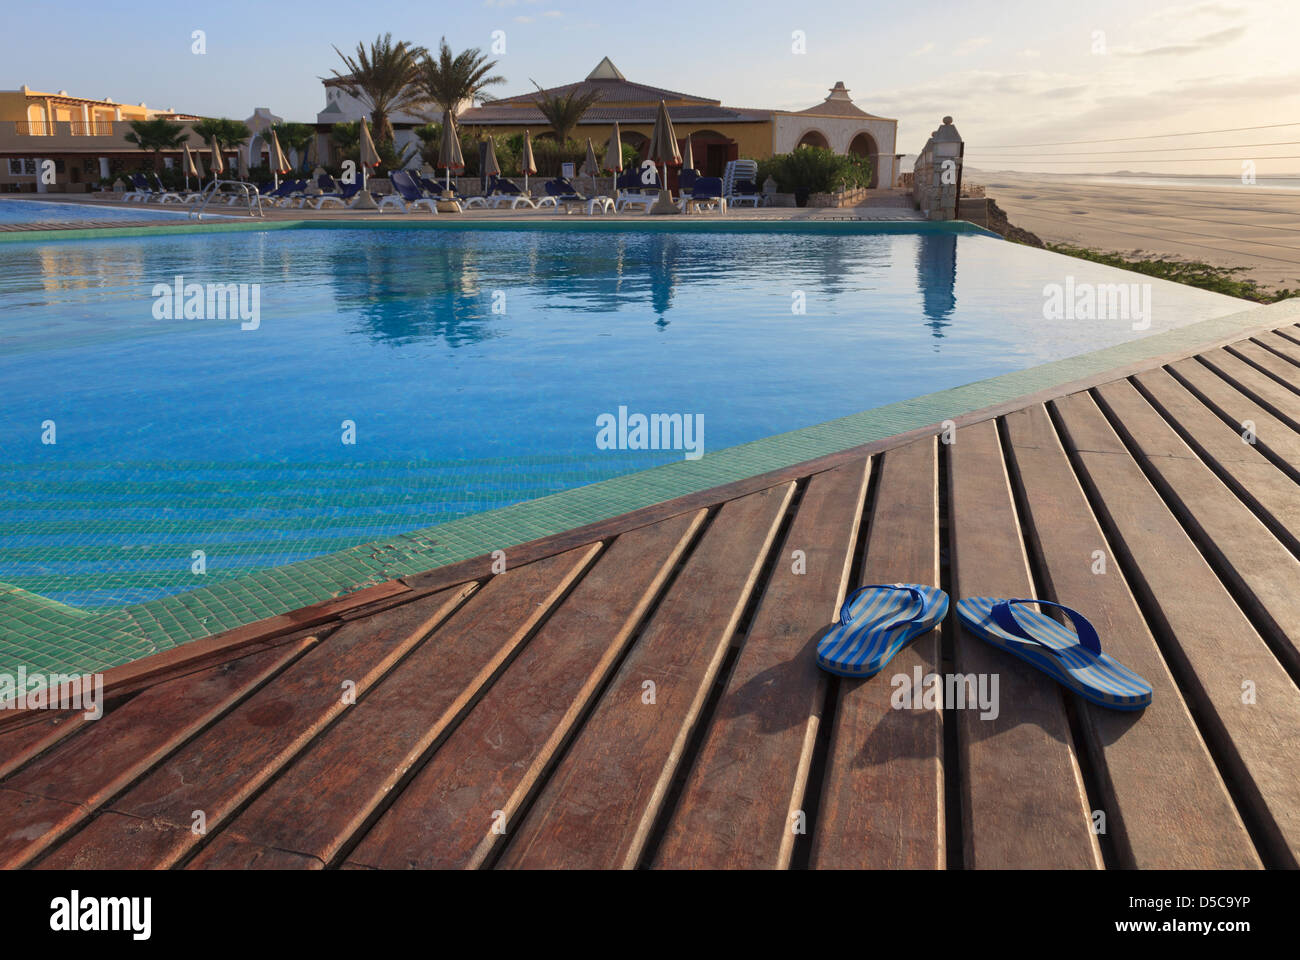 Paar Flip-flops auf Sonne decking leer Infinity-Pool in Luxus Ferienhotel auf Insel Boa Vista, Kapverden Stockfoto